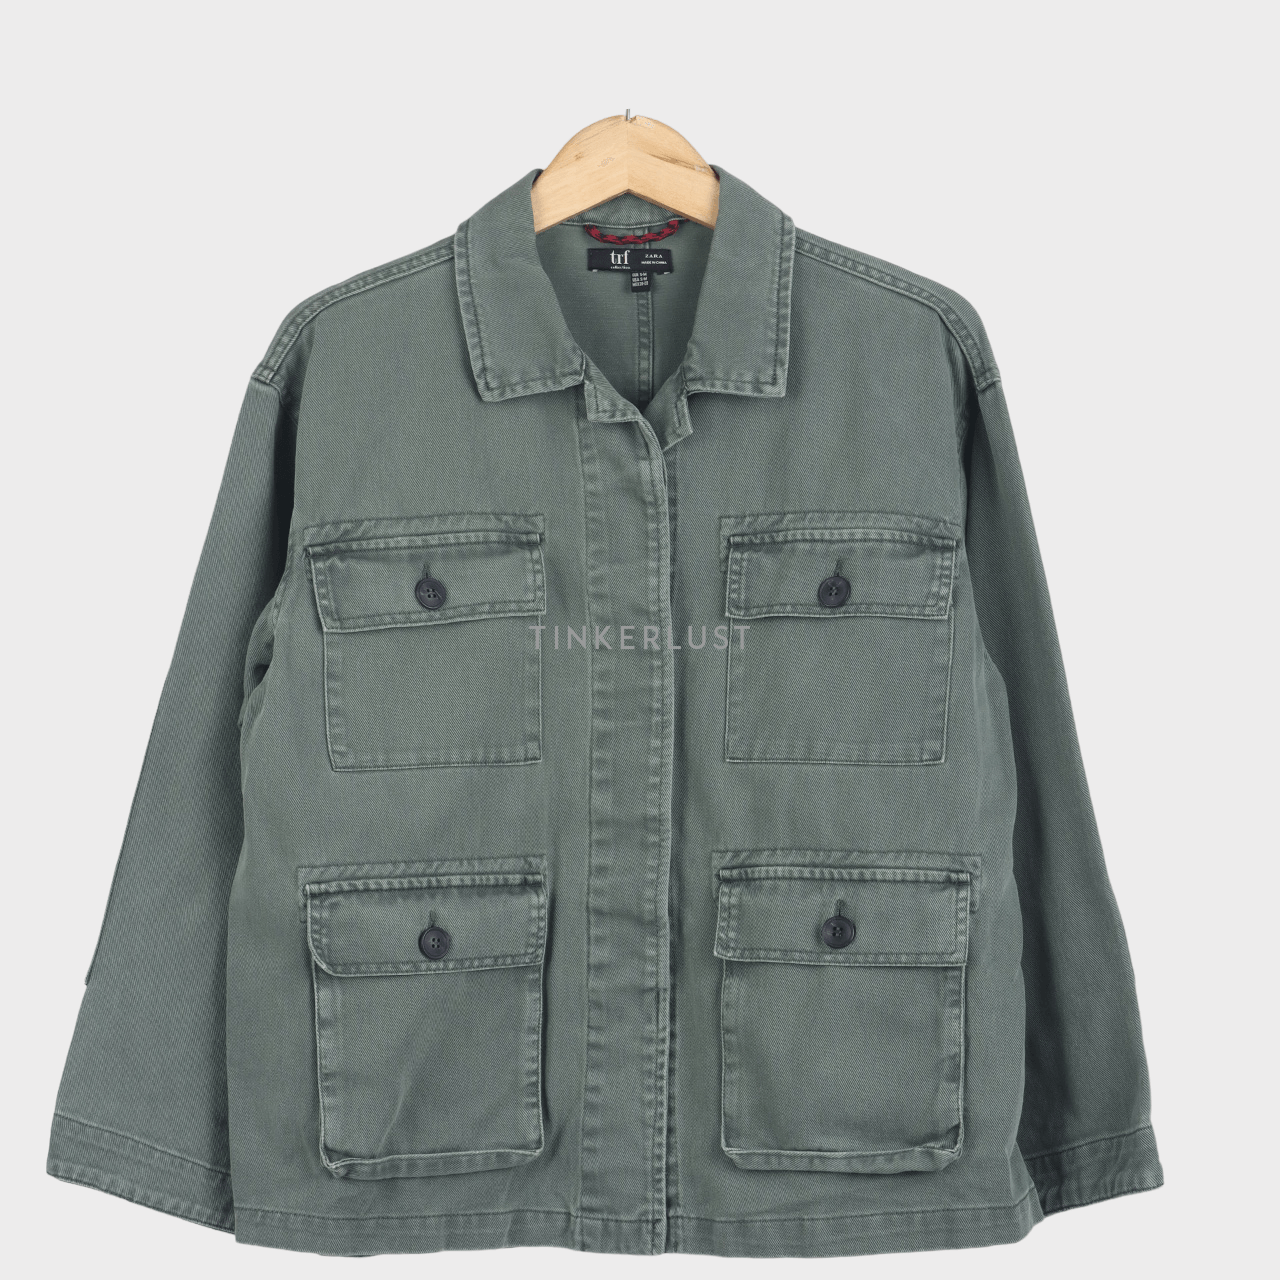 Zara Green Jacket